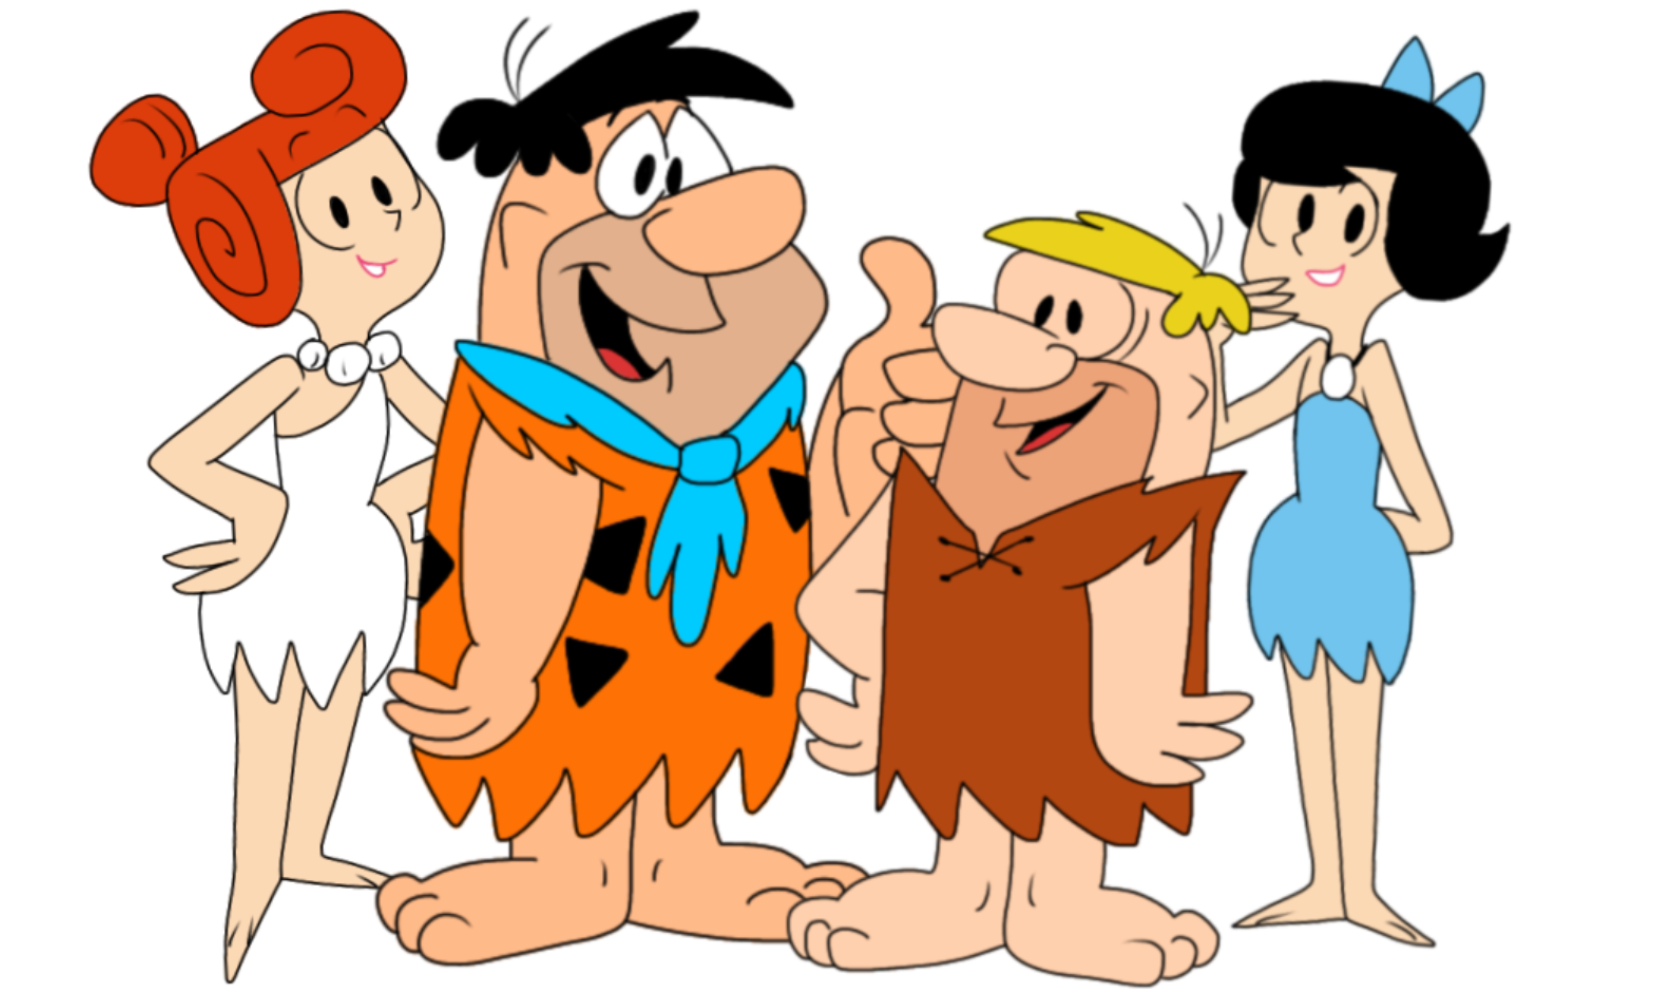 The Flintstones and Rubbles (Hanna Barbera) by mcdnalds2016 on DeviantArt